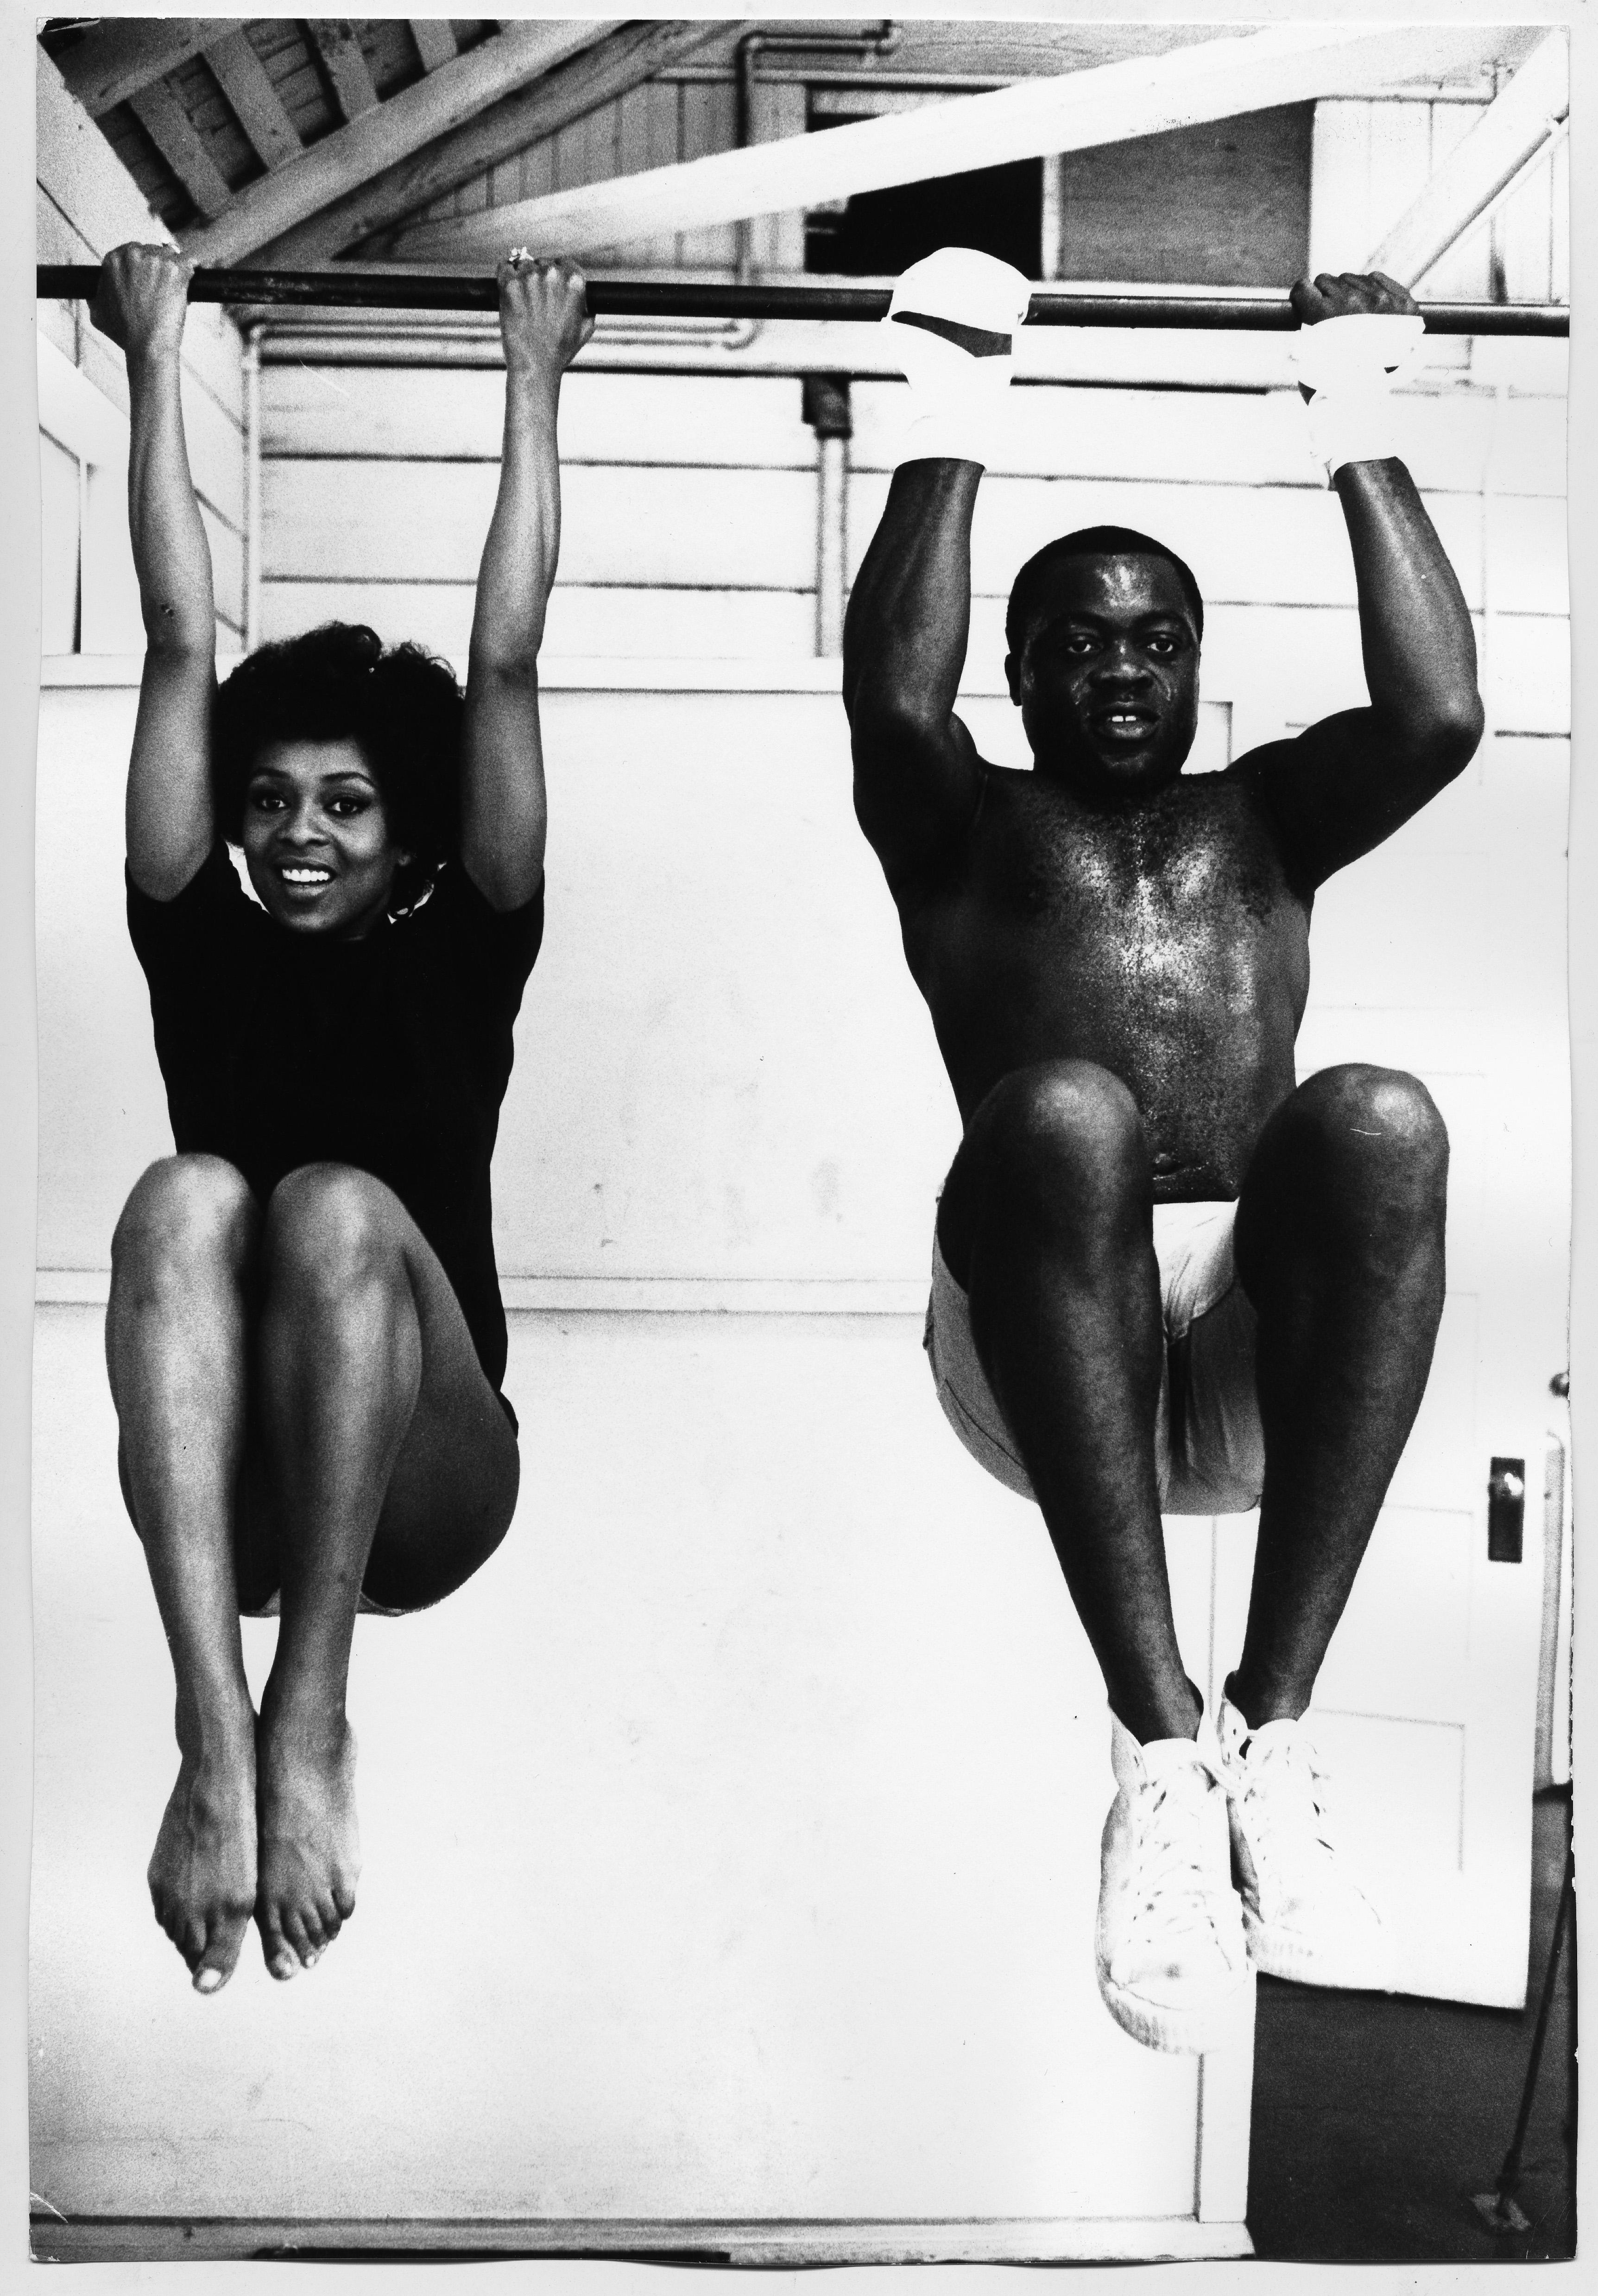 Frank D. Dandridge Black and White Photograph - Lola Falana in the gym doing pull-ups photographed by Frank Dandridge, 1969.